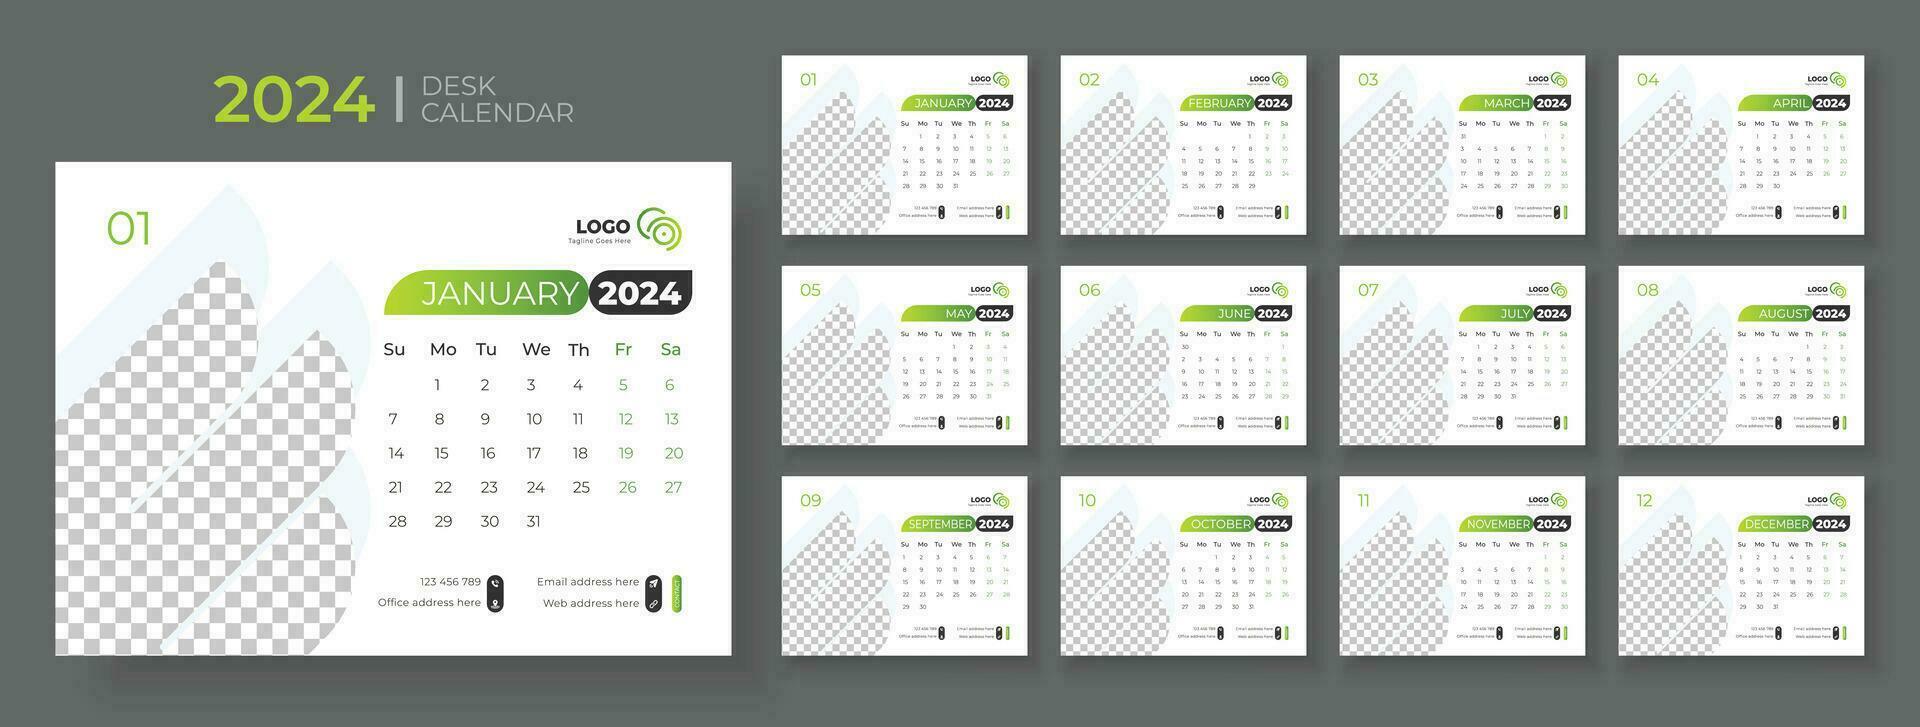 Desk calendar template 2024, Week Starts on sunday, Office Calendar 2024 vector